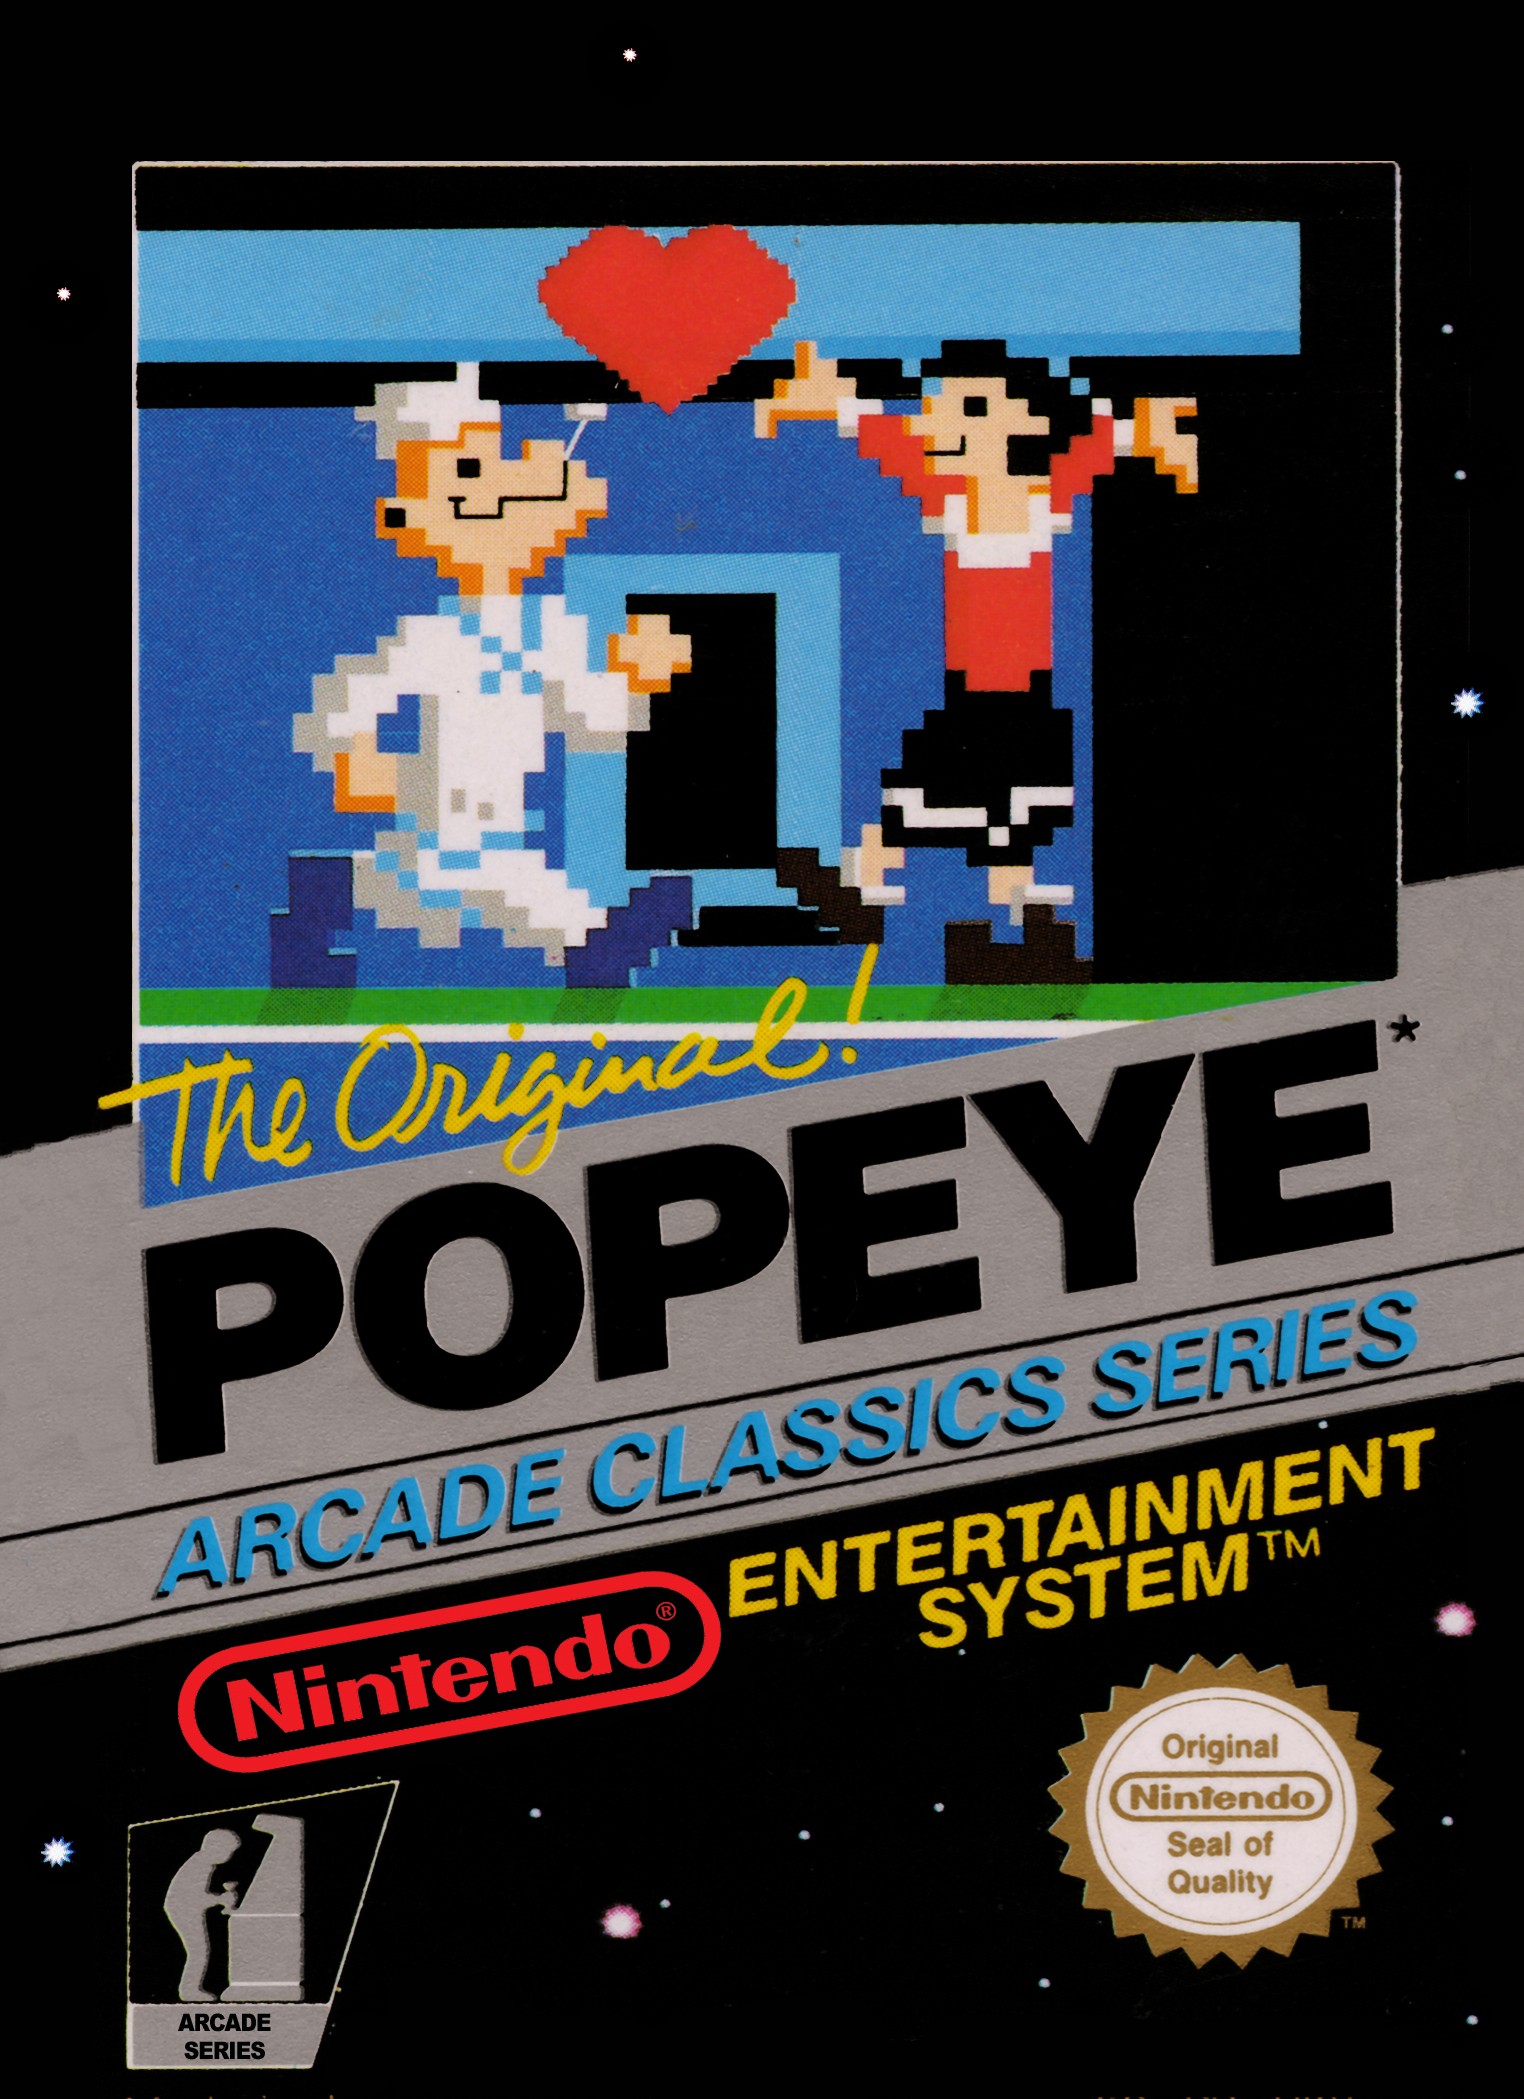 'Popeye'